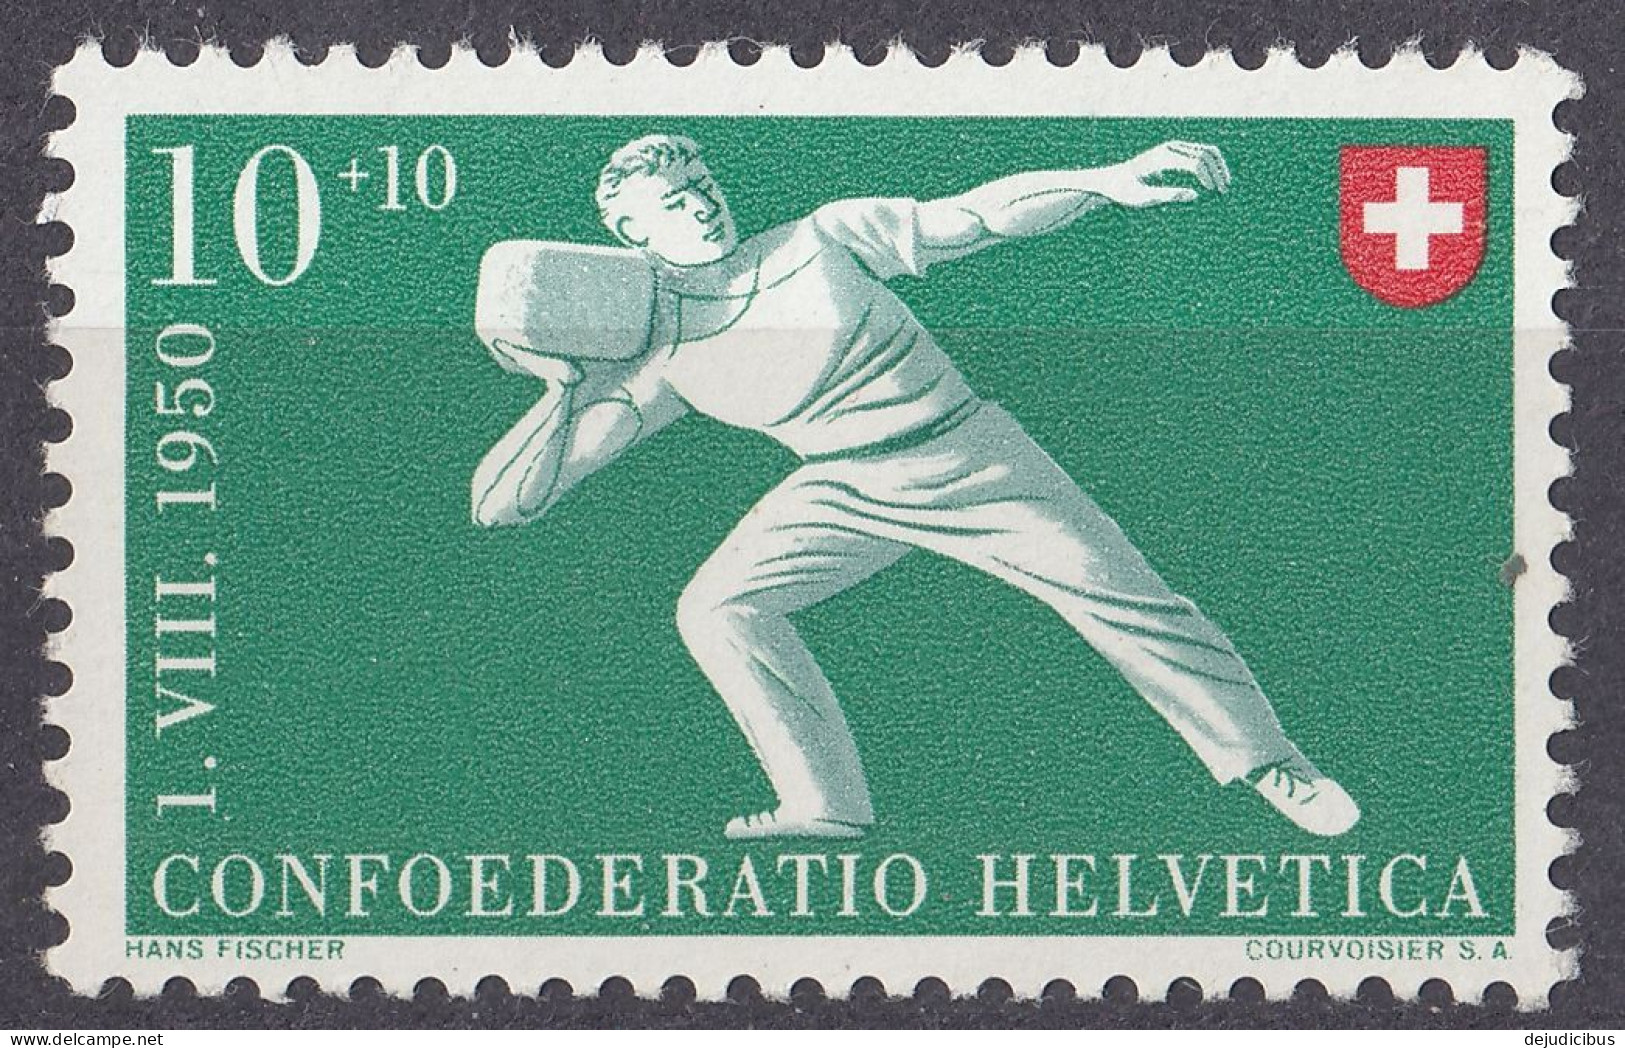 HELVETIA - SUISSE - SVIZZERA - 1950 - Yvert 498 Nuovo MNH. - Neufs